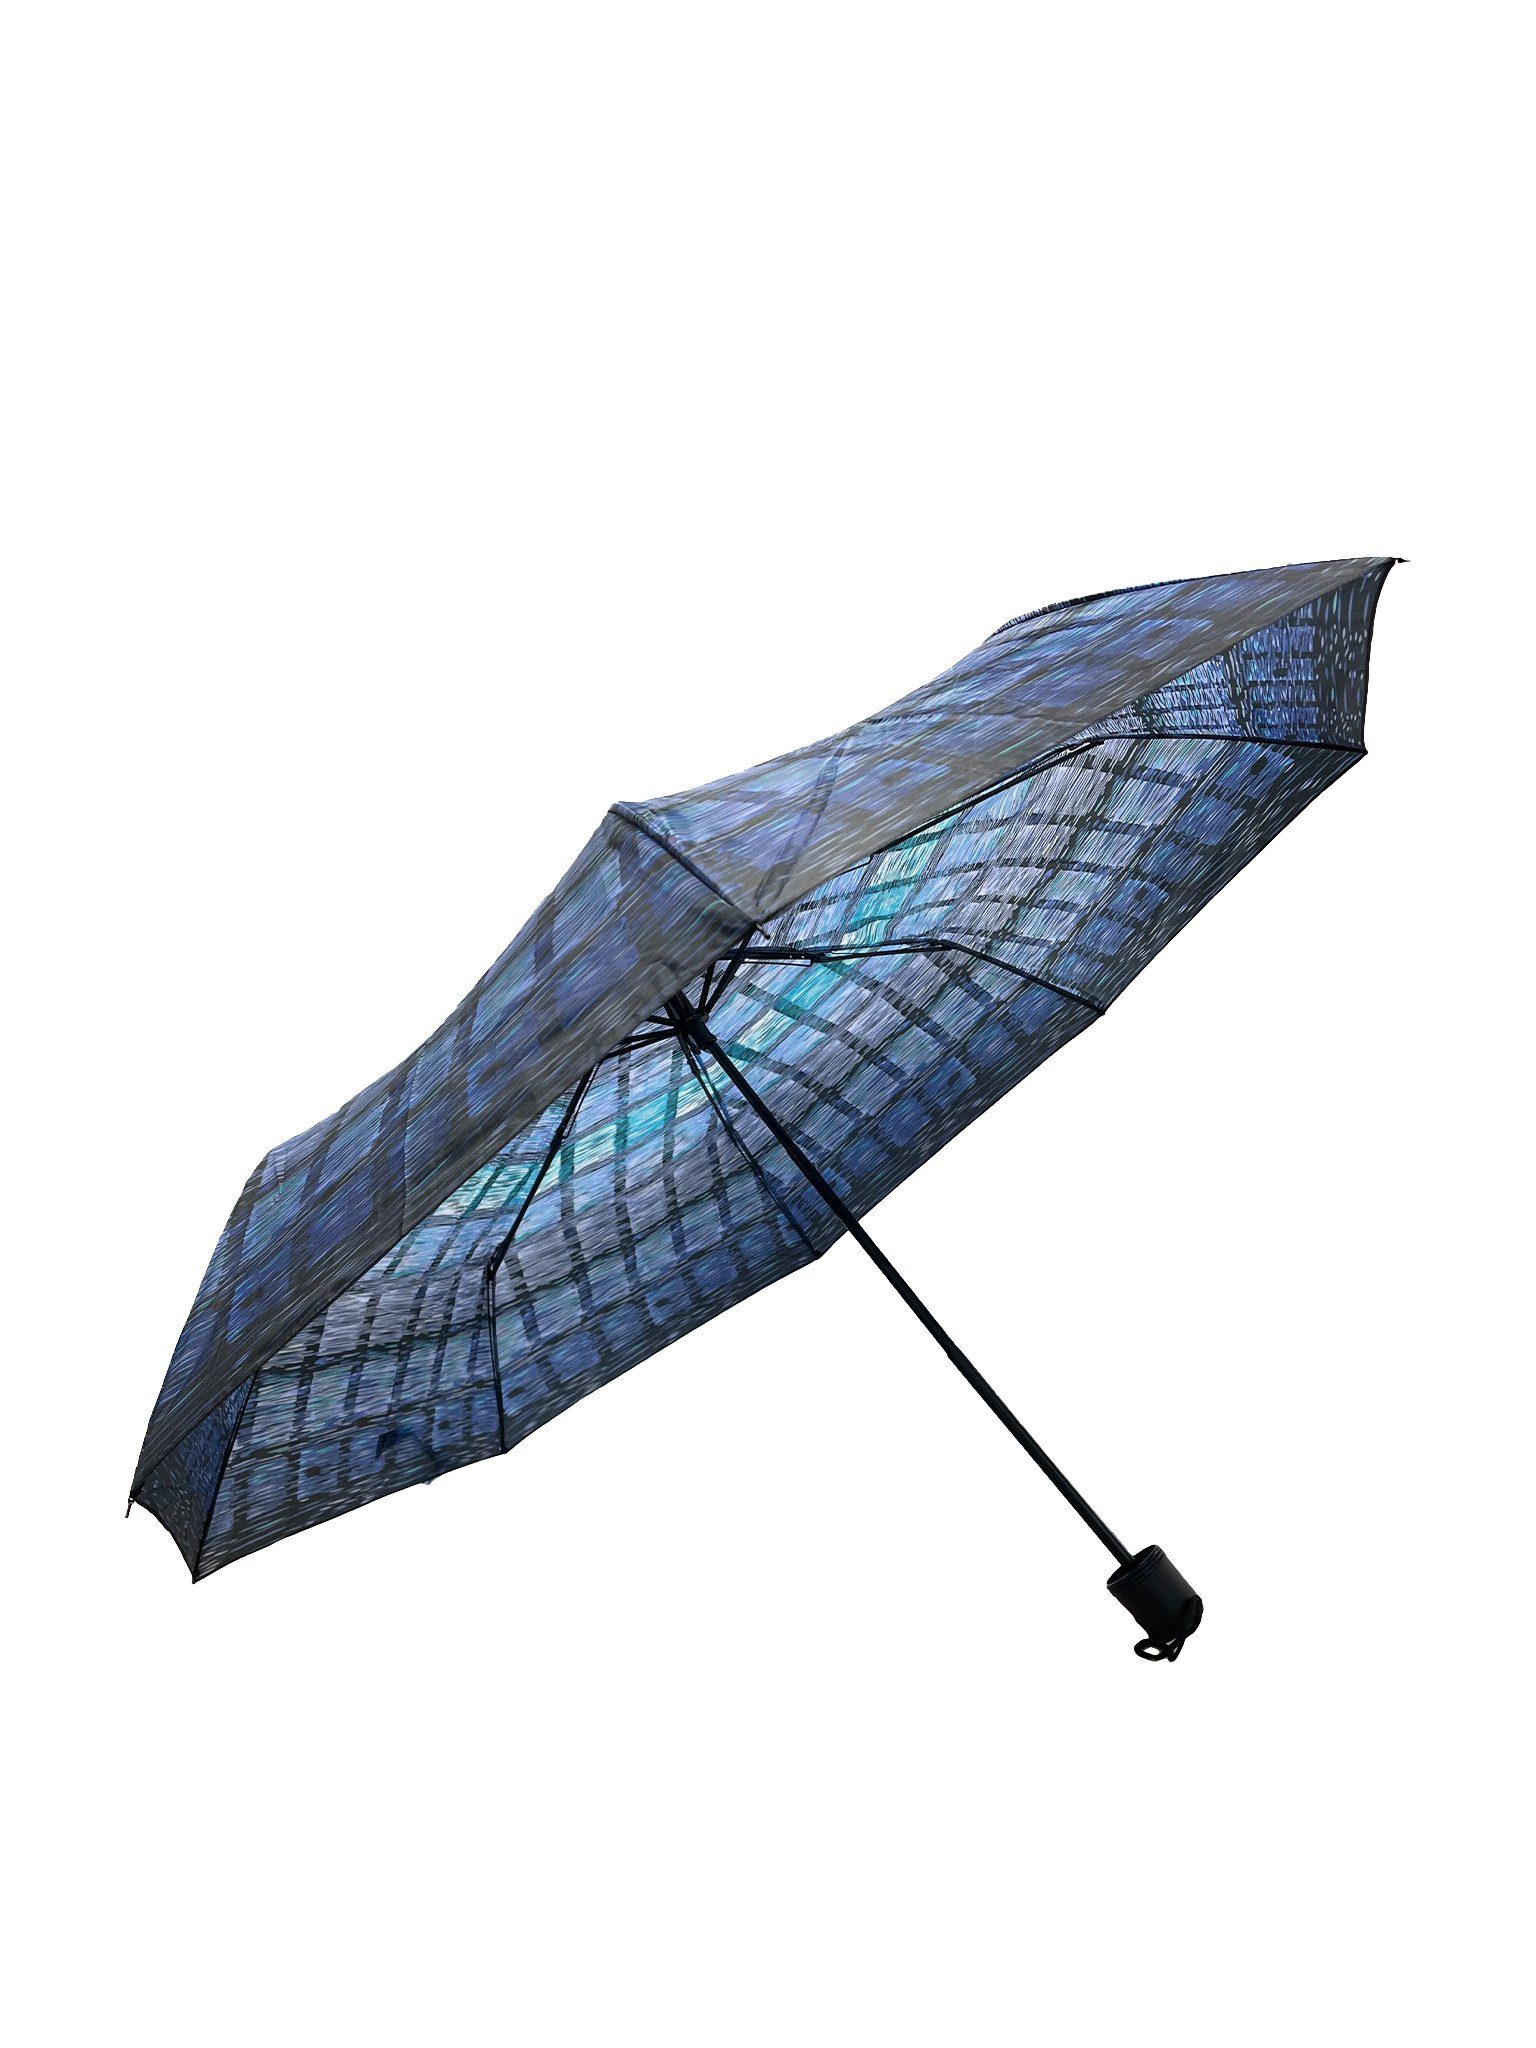 Türkis Paris in ANELY 6746 Kleiner Taschenschirm, Taschenregenschirm Regenschirm Gemustert